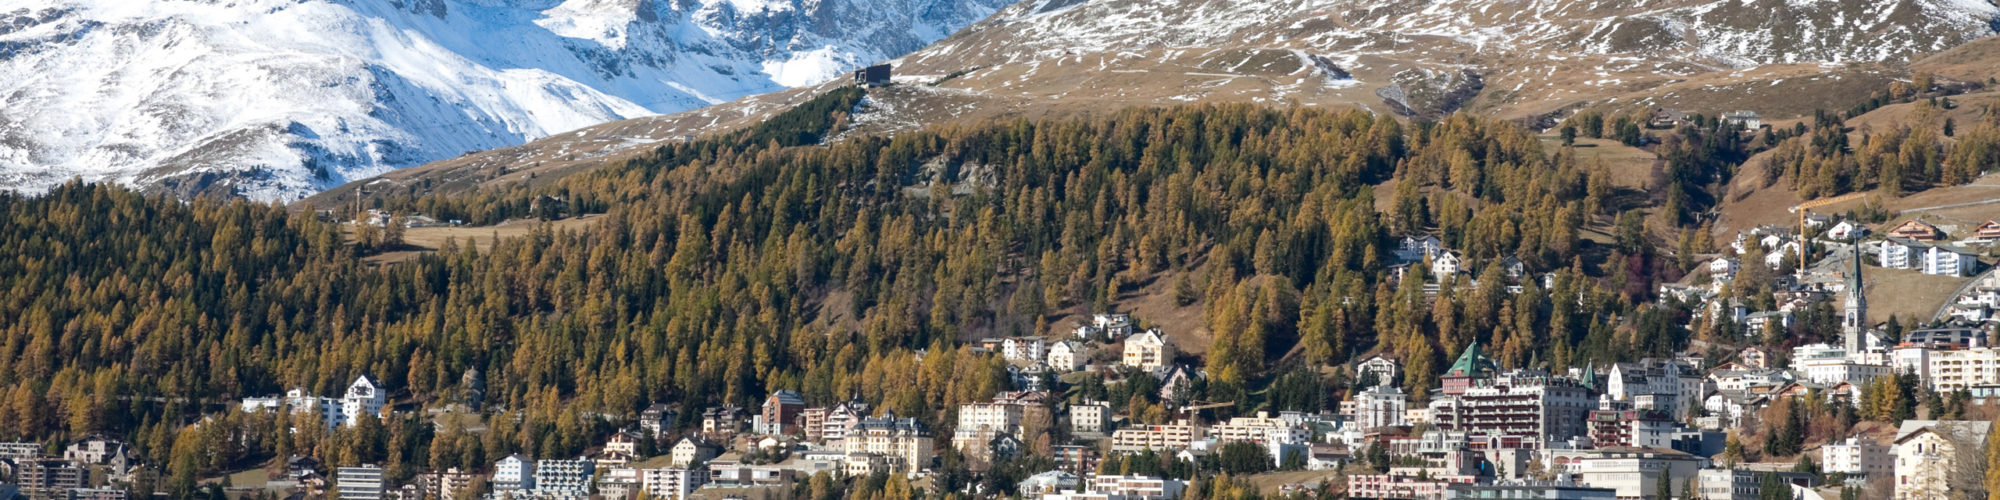 St Moritz Travel travel agents packages deals